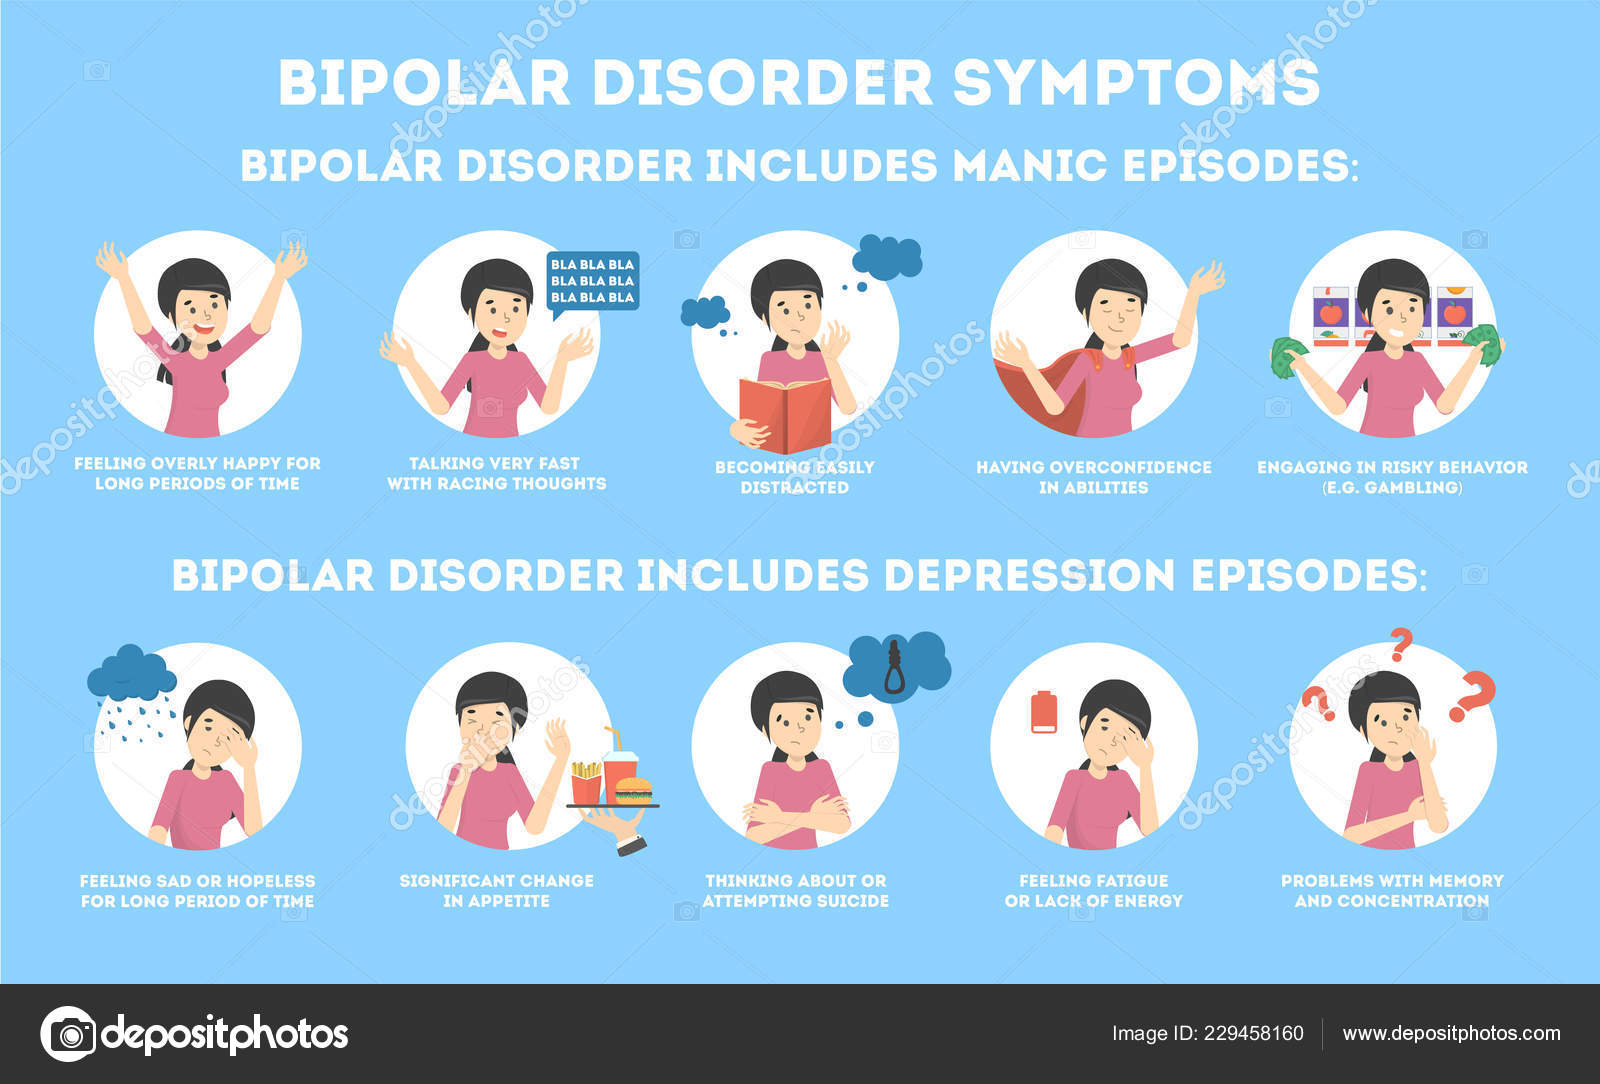 mania disorder symptoms